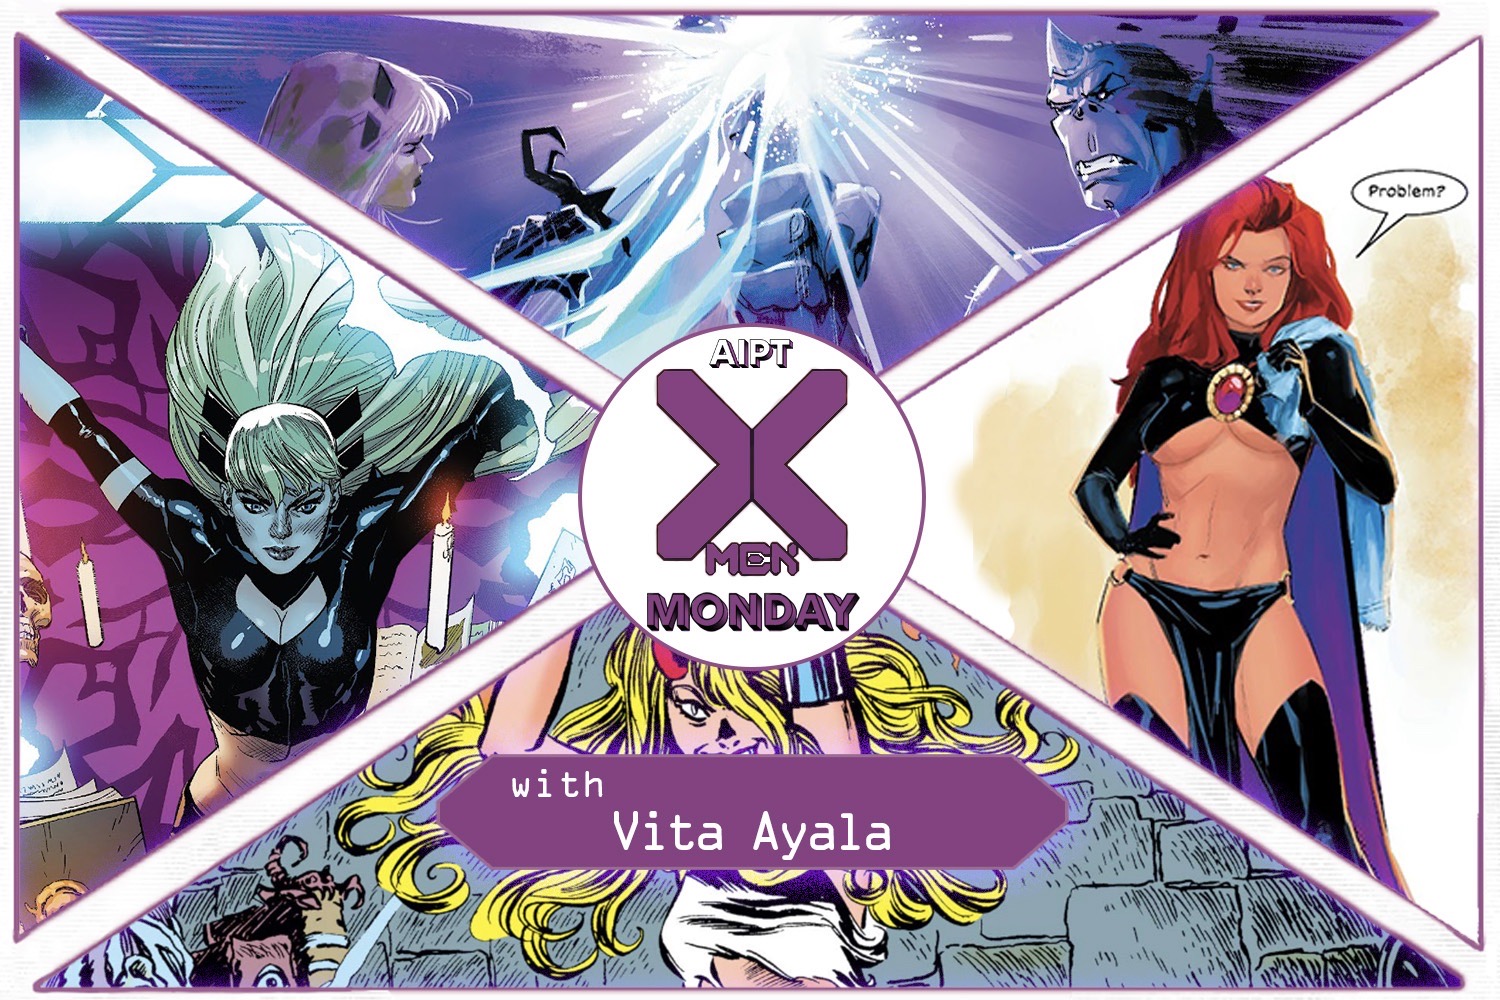 X-Men Monday #158 - Vita Ayala Discusses 'New Mutants'